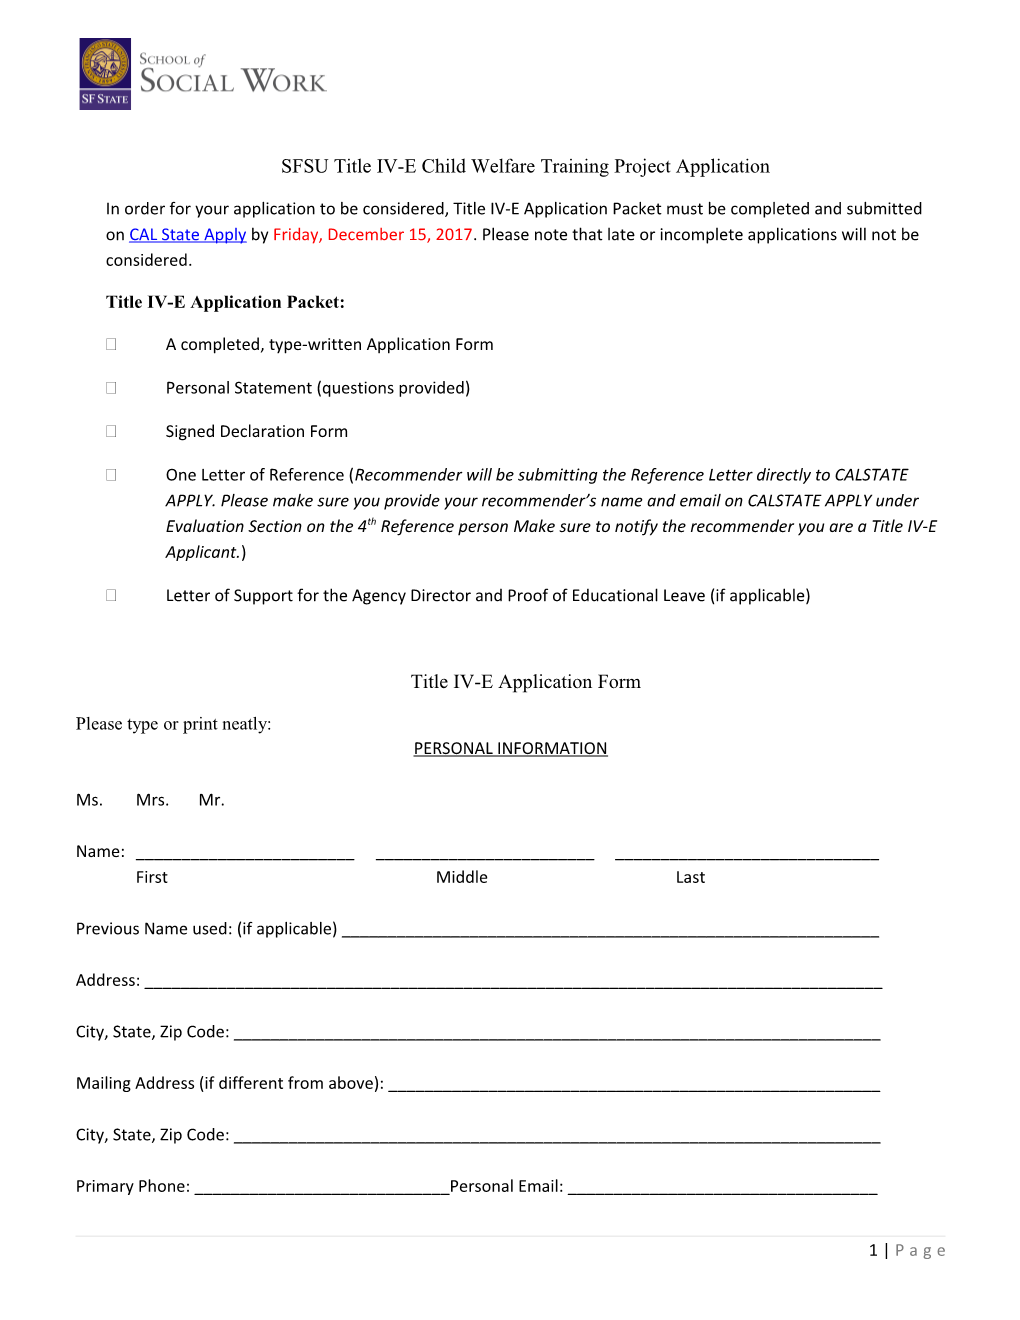 SFSU Title IV-E Child Welfare Training Project Application